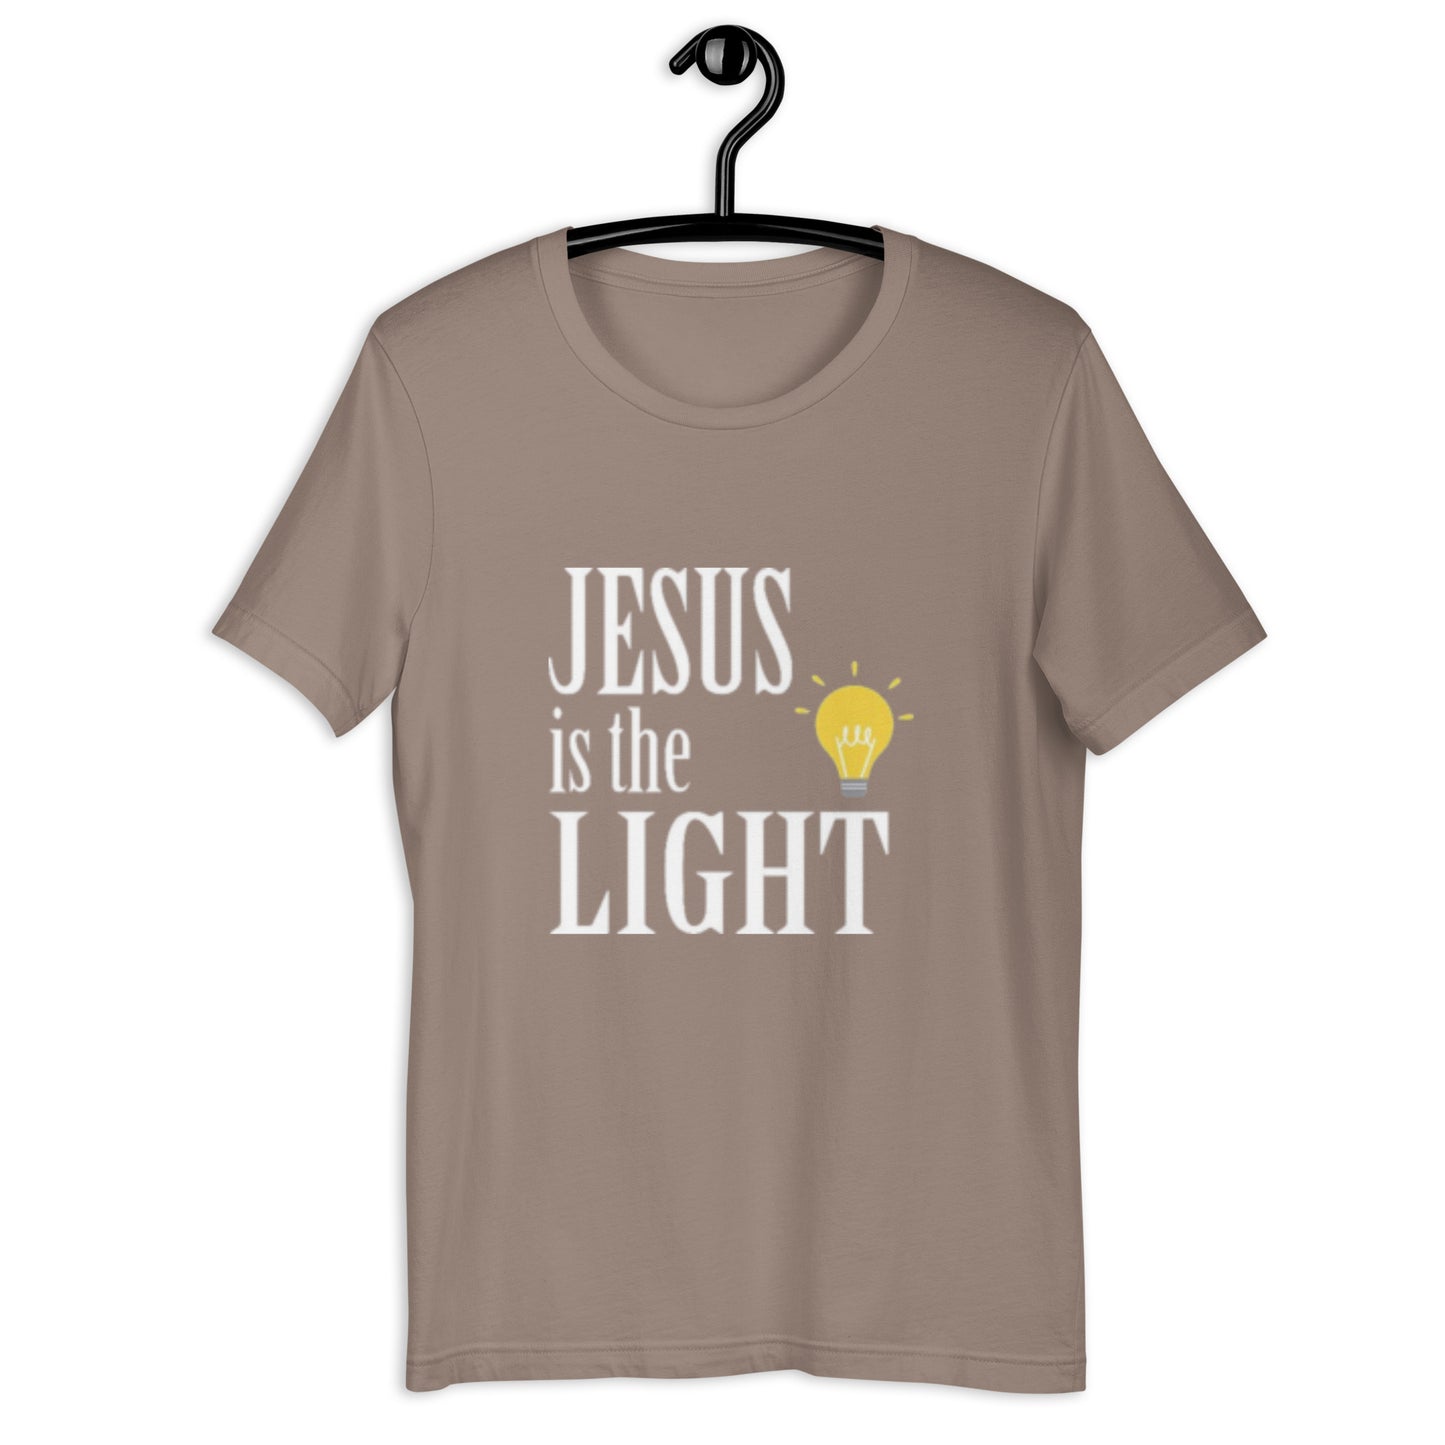 Jesus is the light T shirt